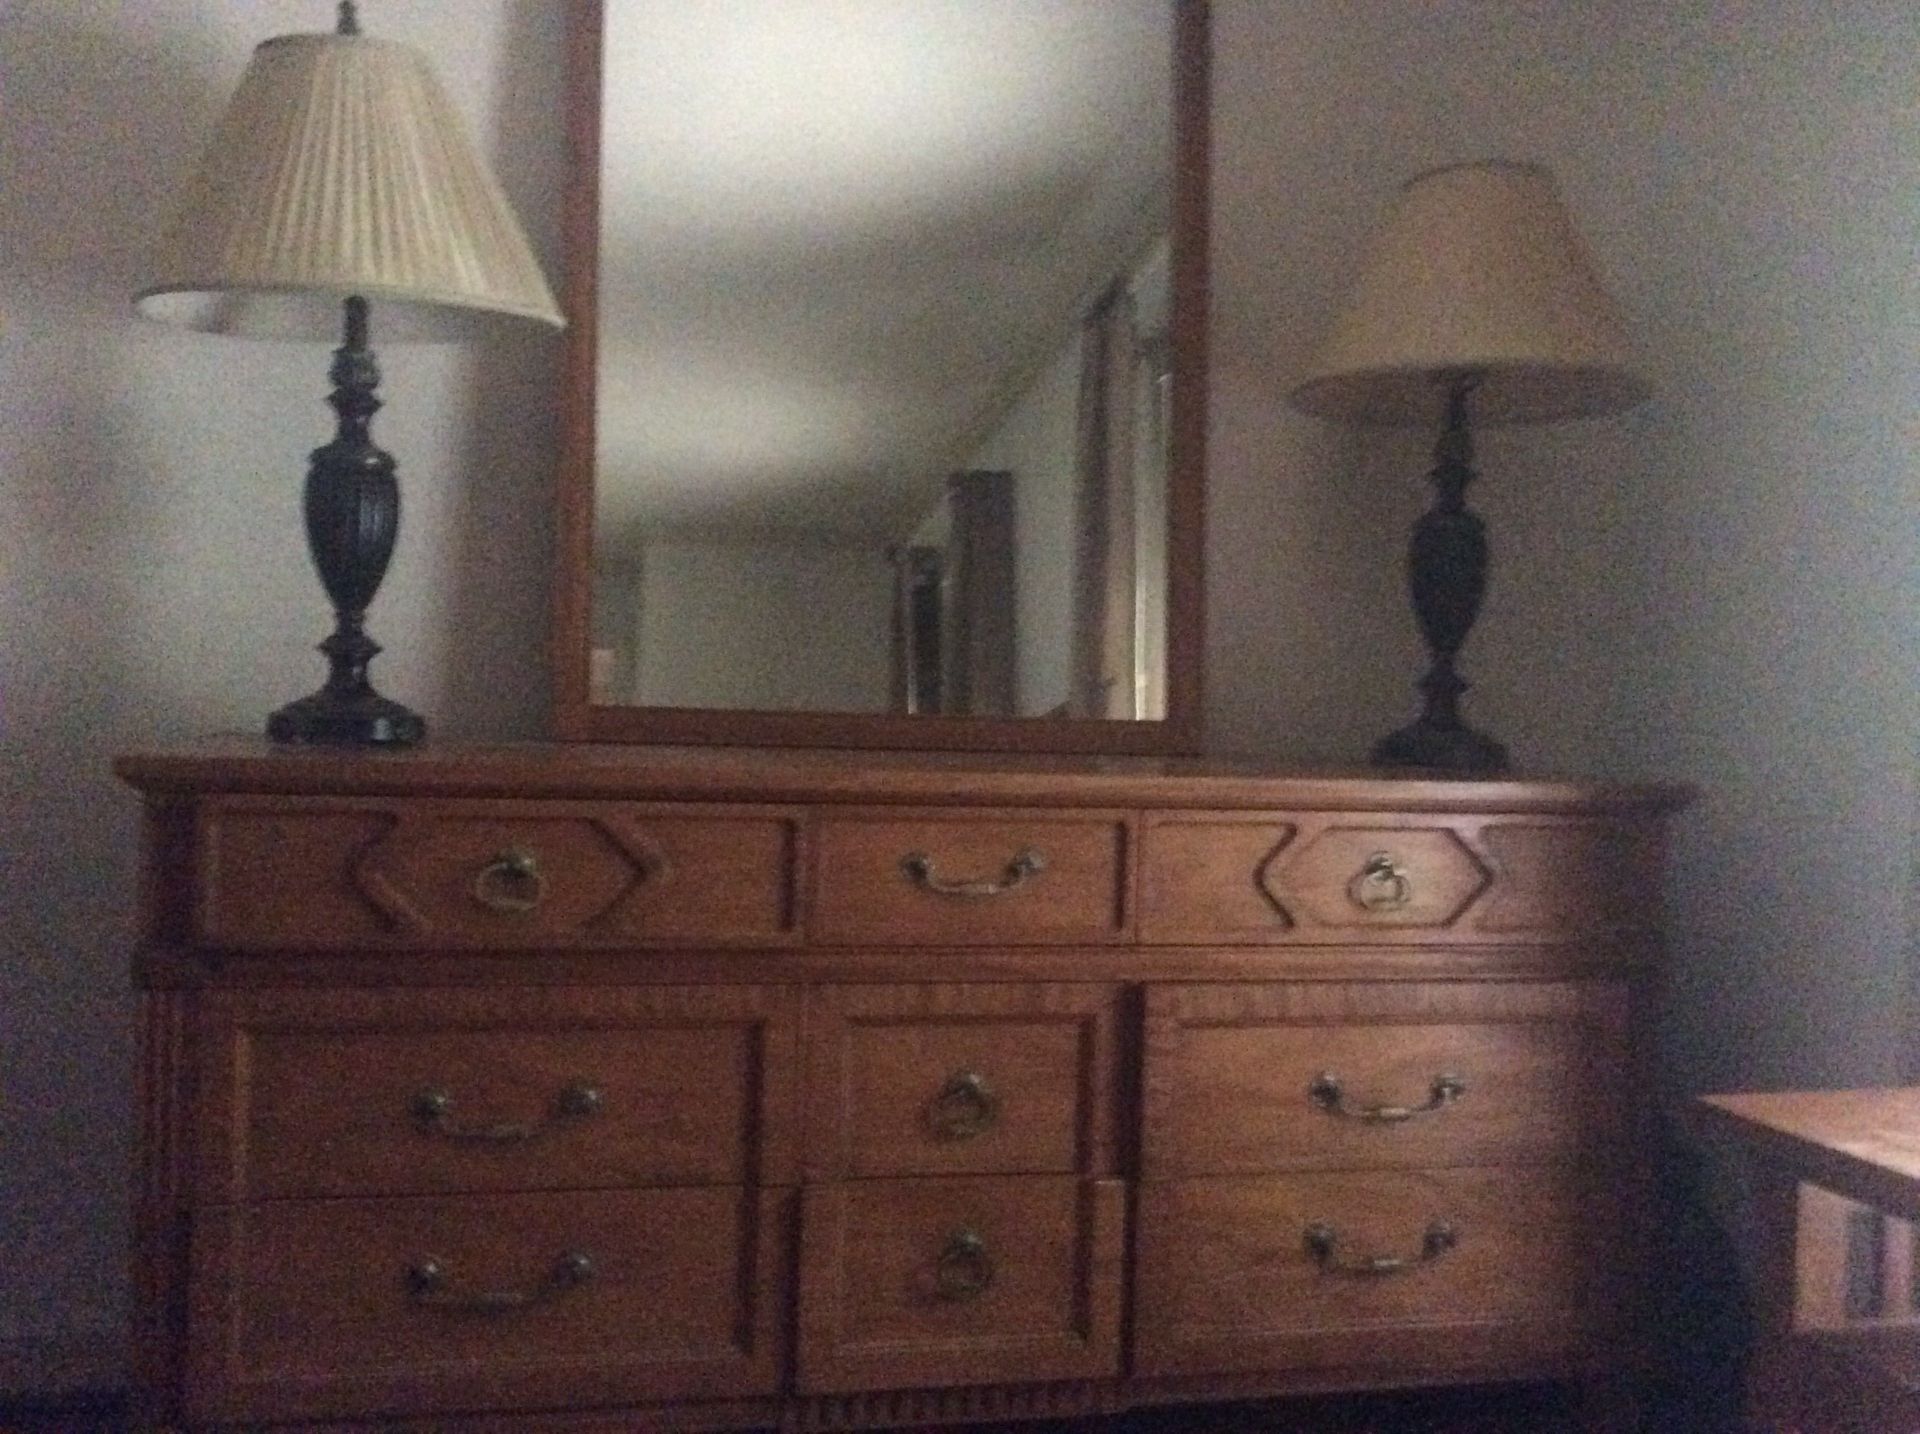 Beautiful antique dresser and mirror